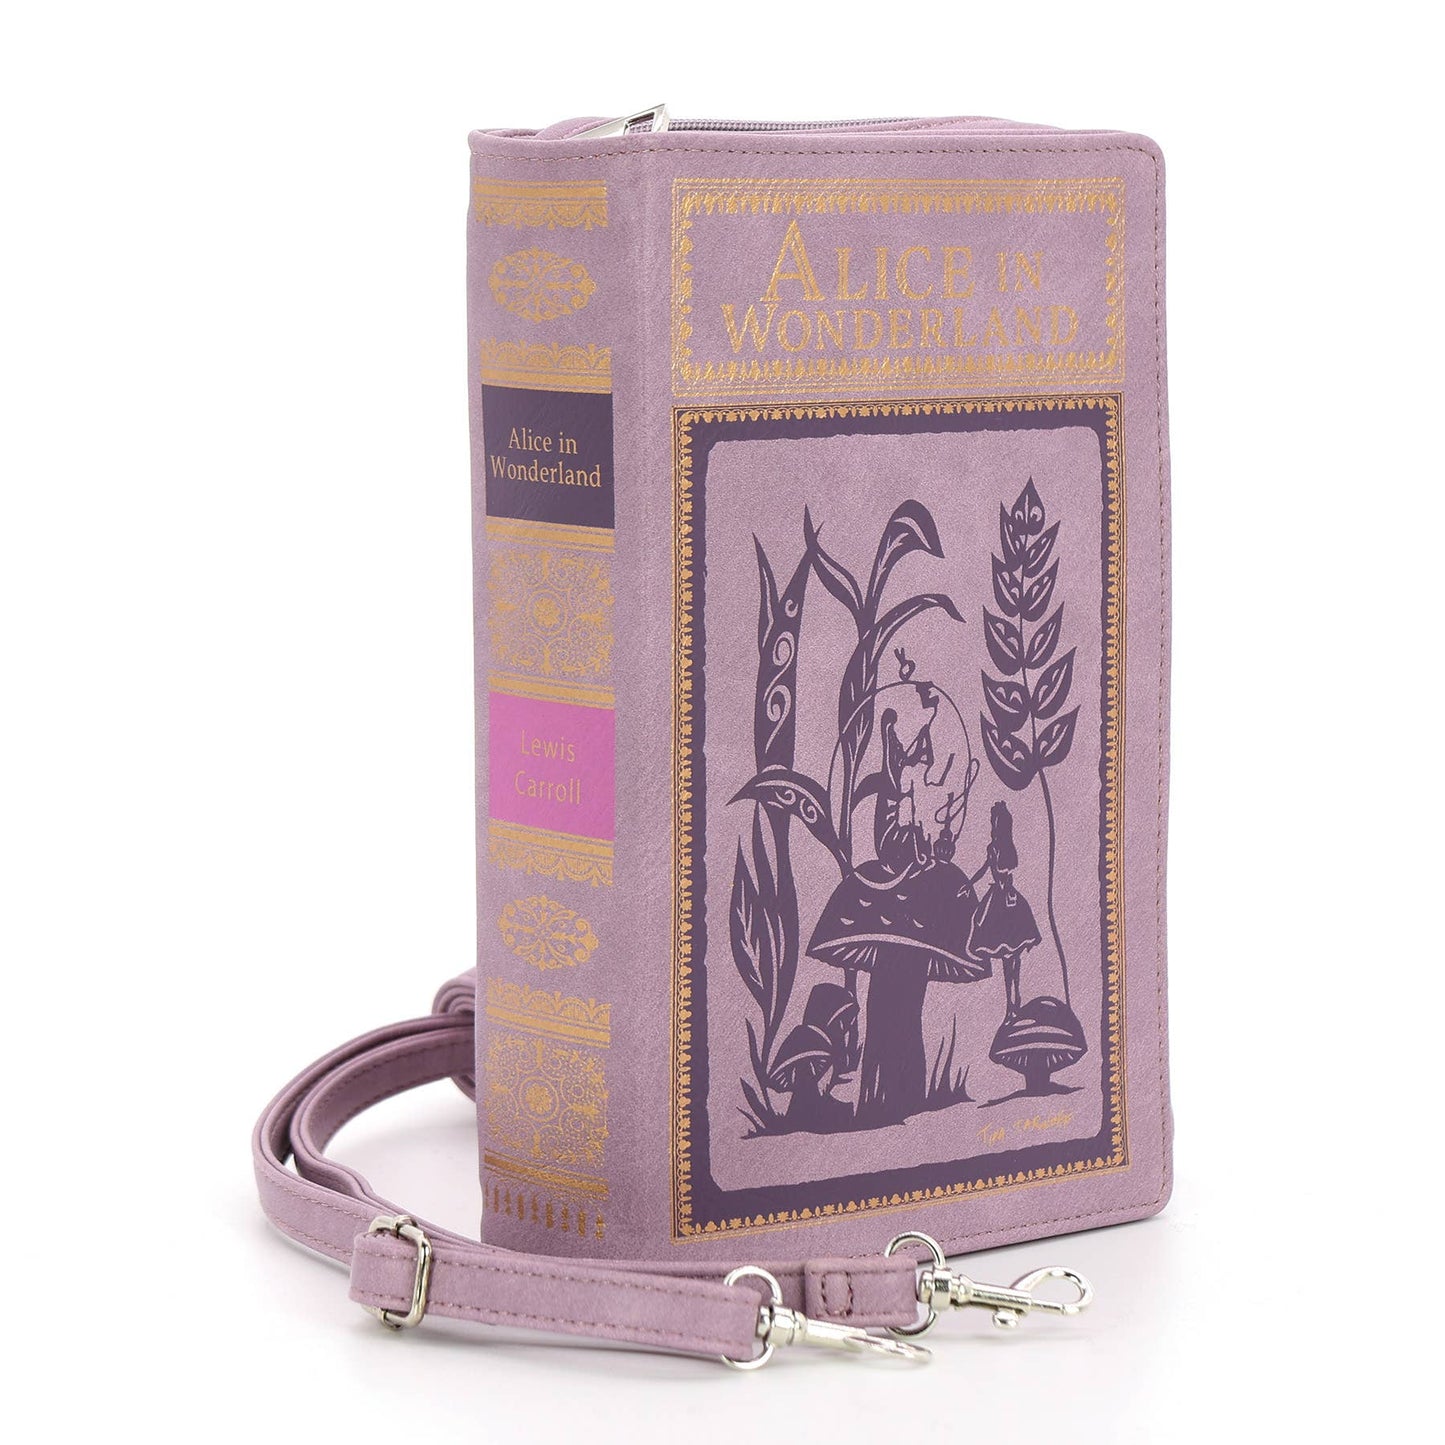 COMECO INC - Alice in Wonderland Book Clutch Bag in Vinyl